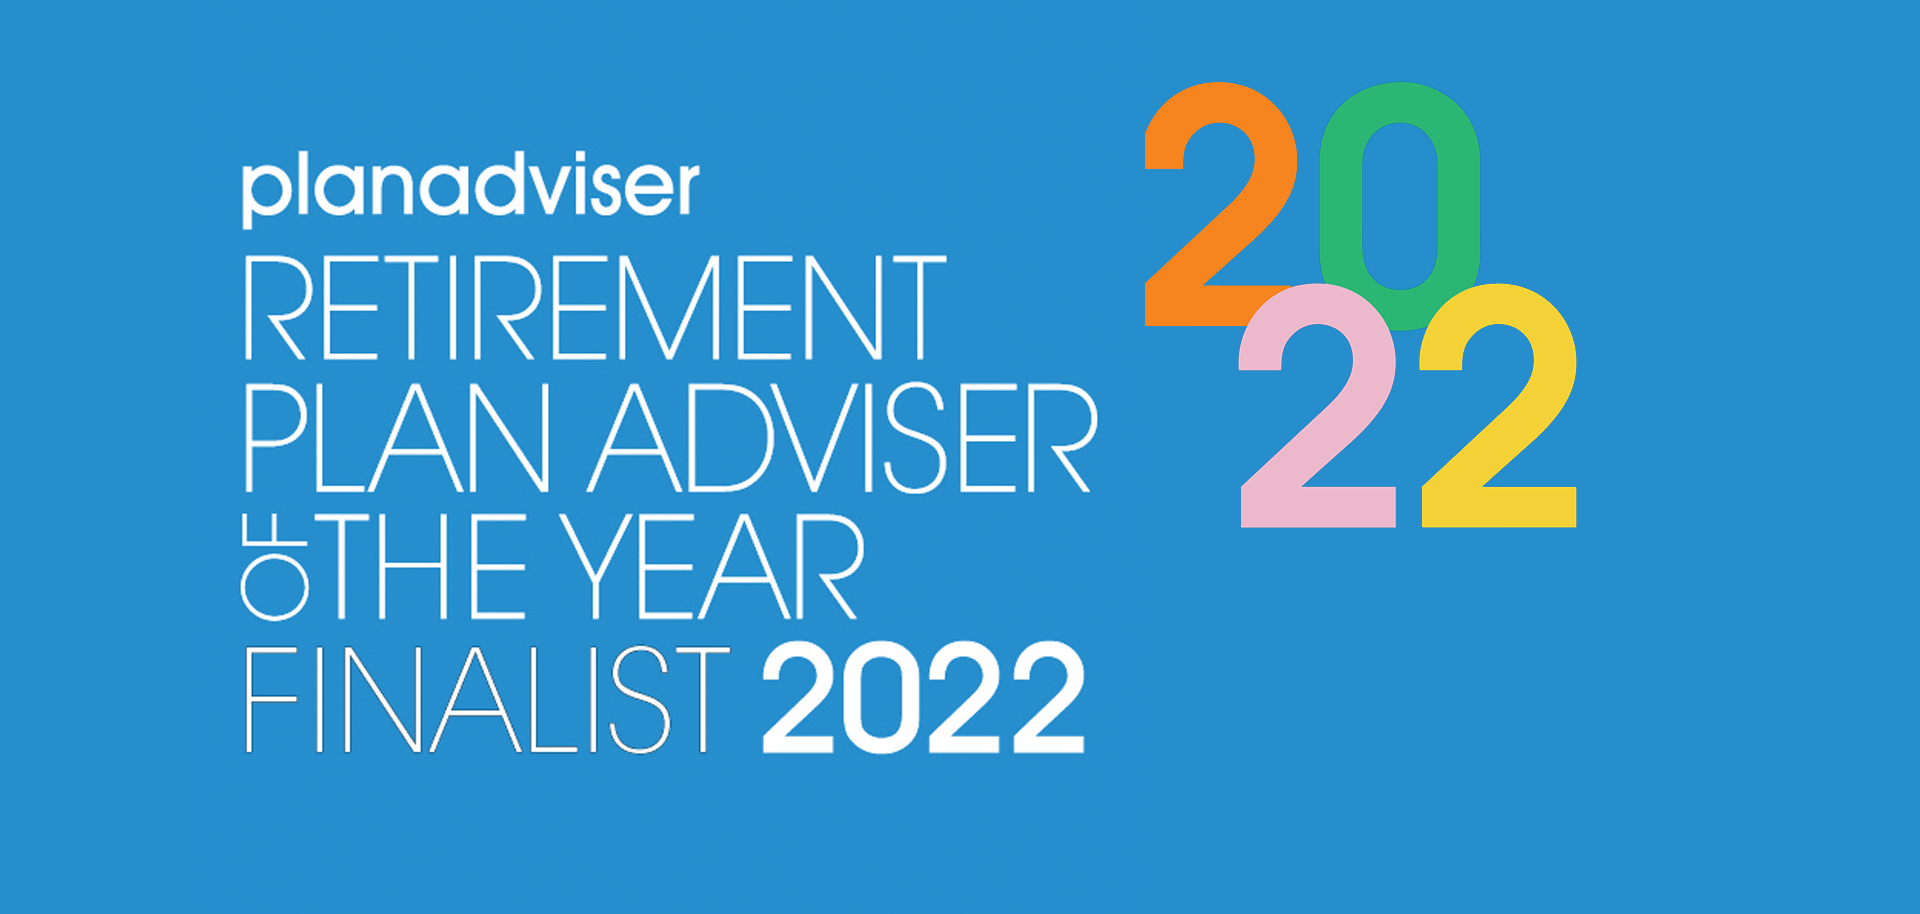 PlanAdviser Retirement Plan Adviser of the Year Finalist